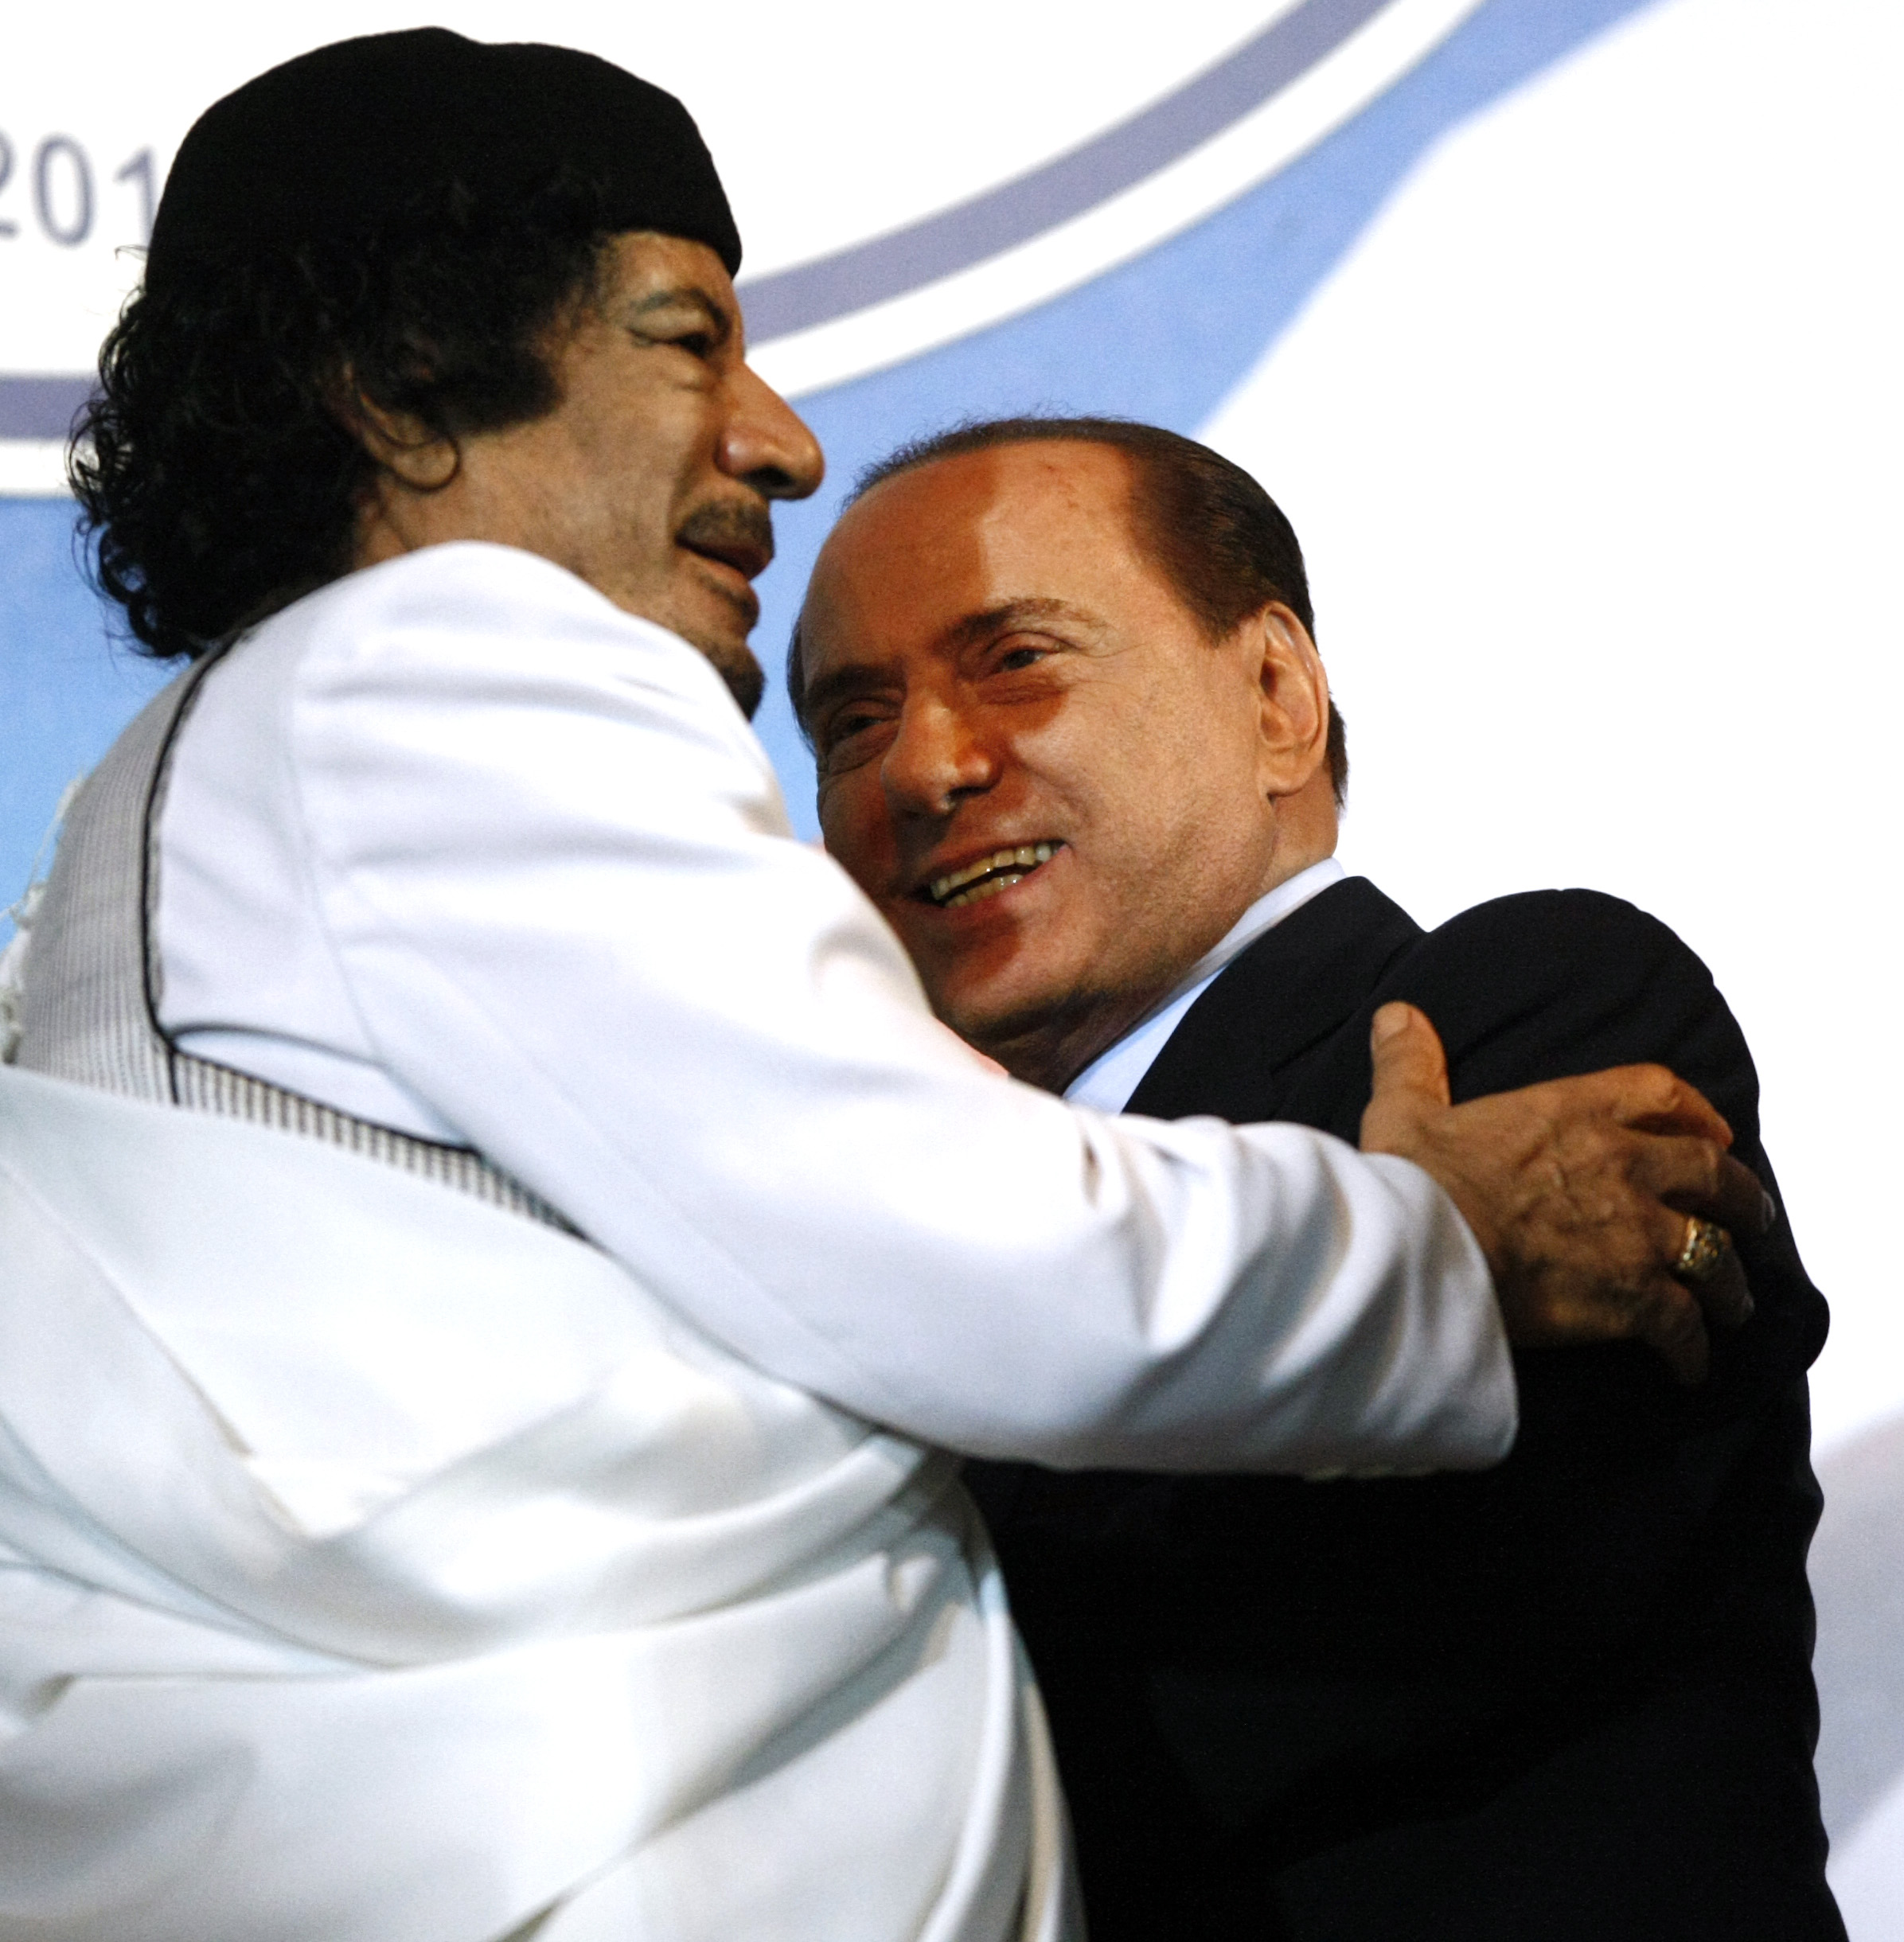 Grabbarna Khadaffi och Berlusconi.